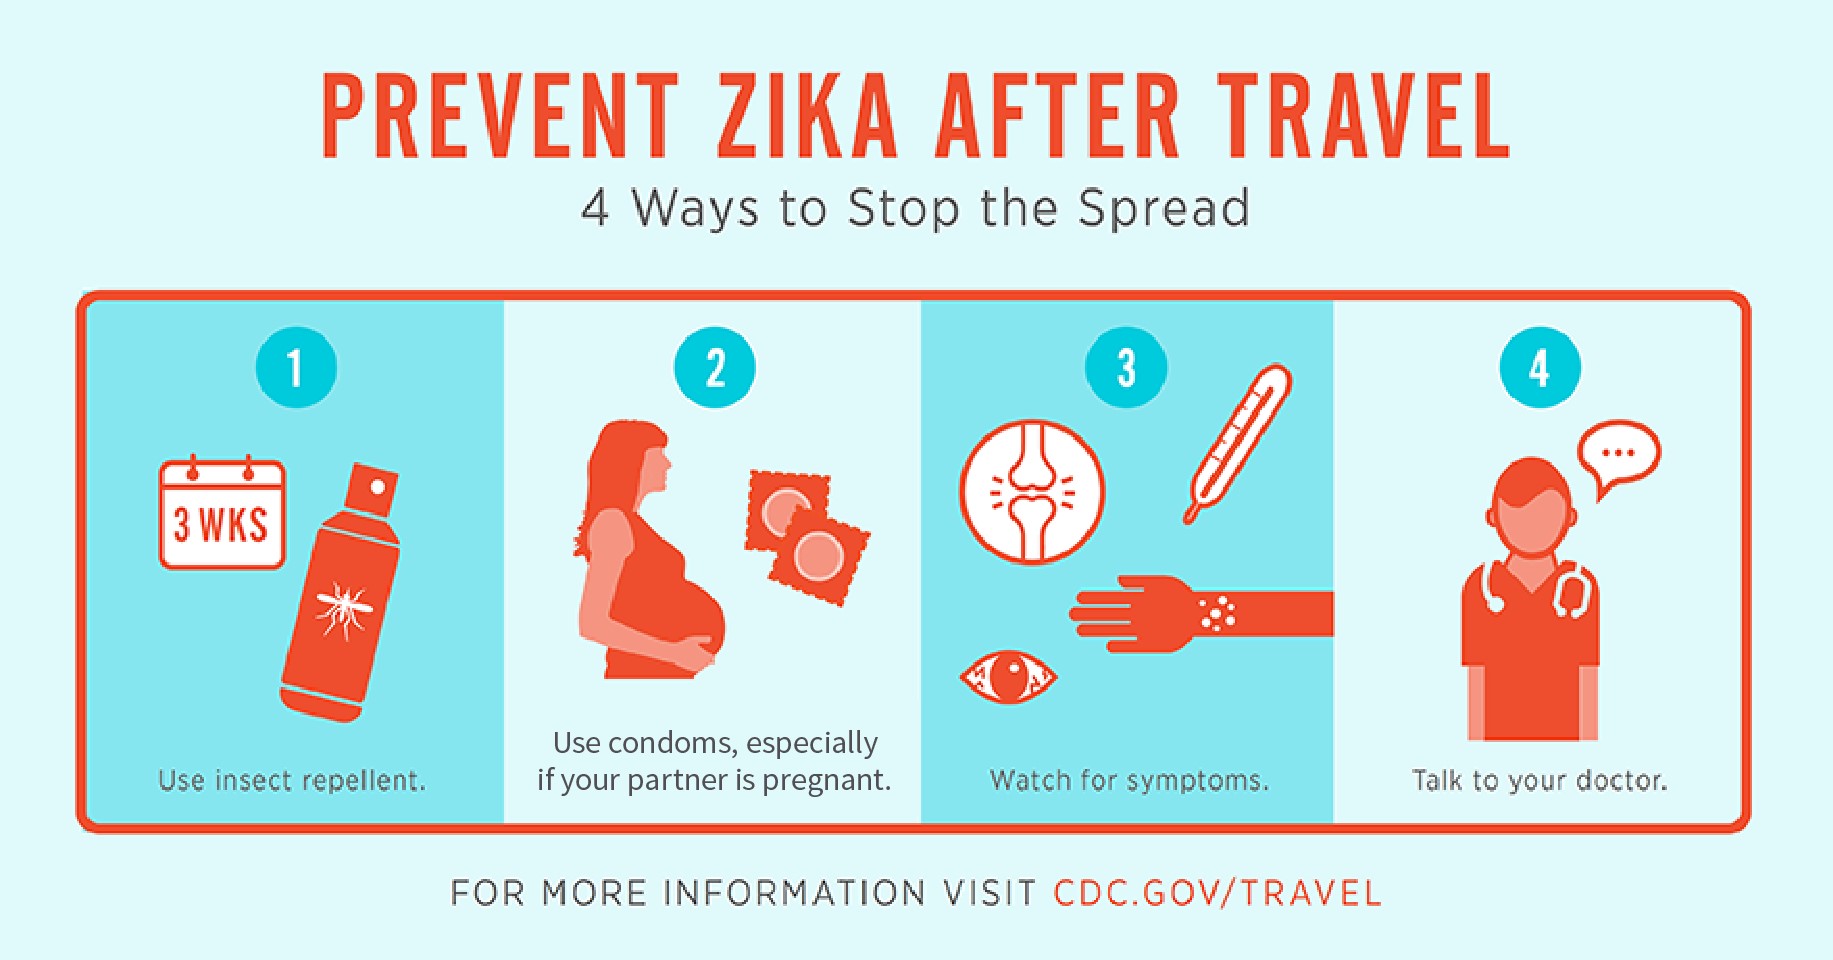 4 ways to precent Zika after travel